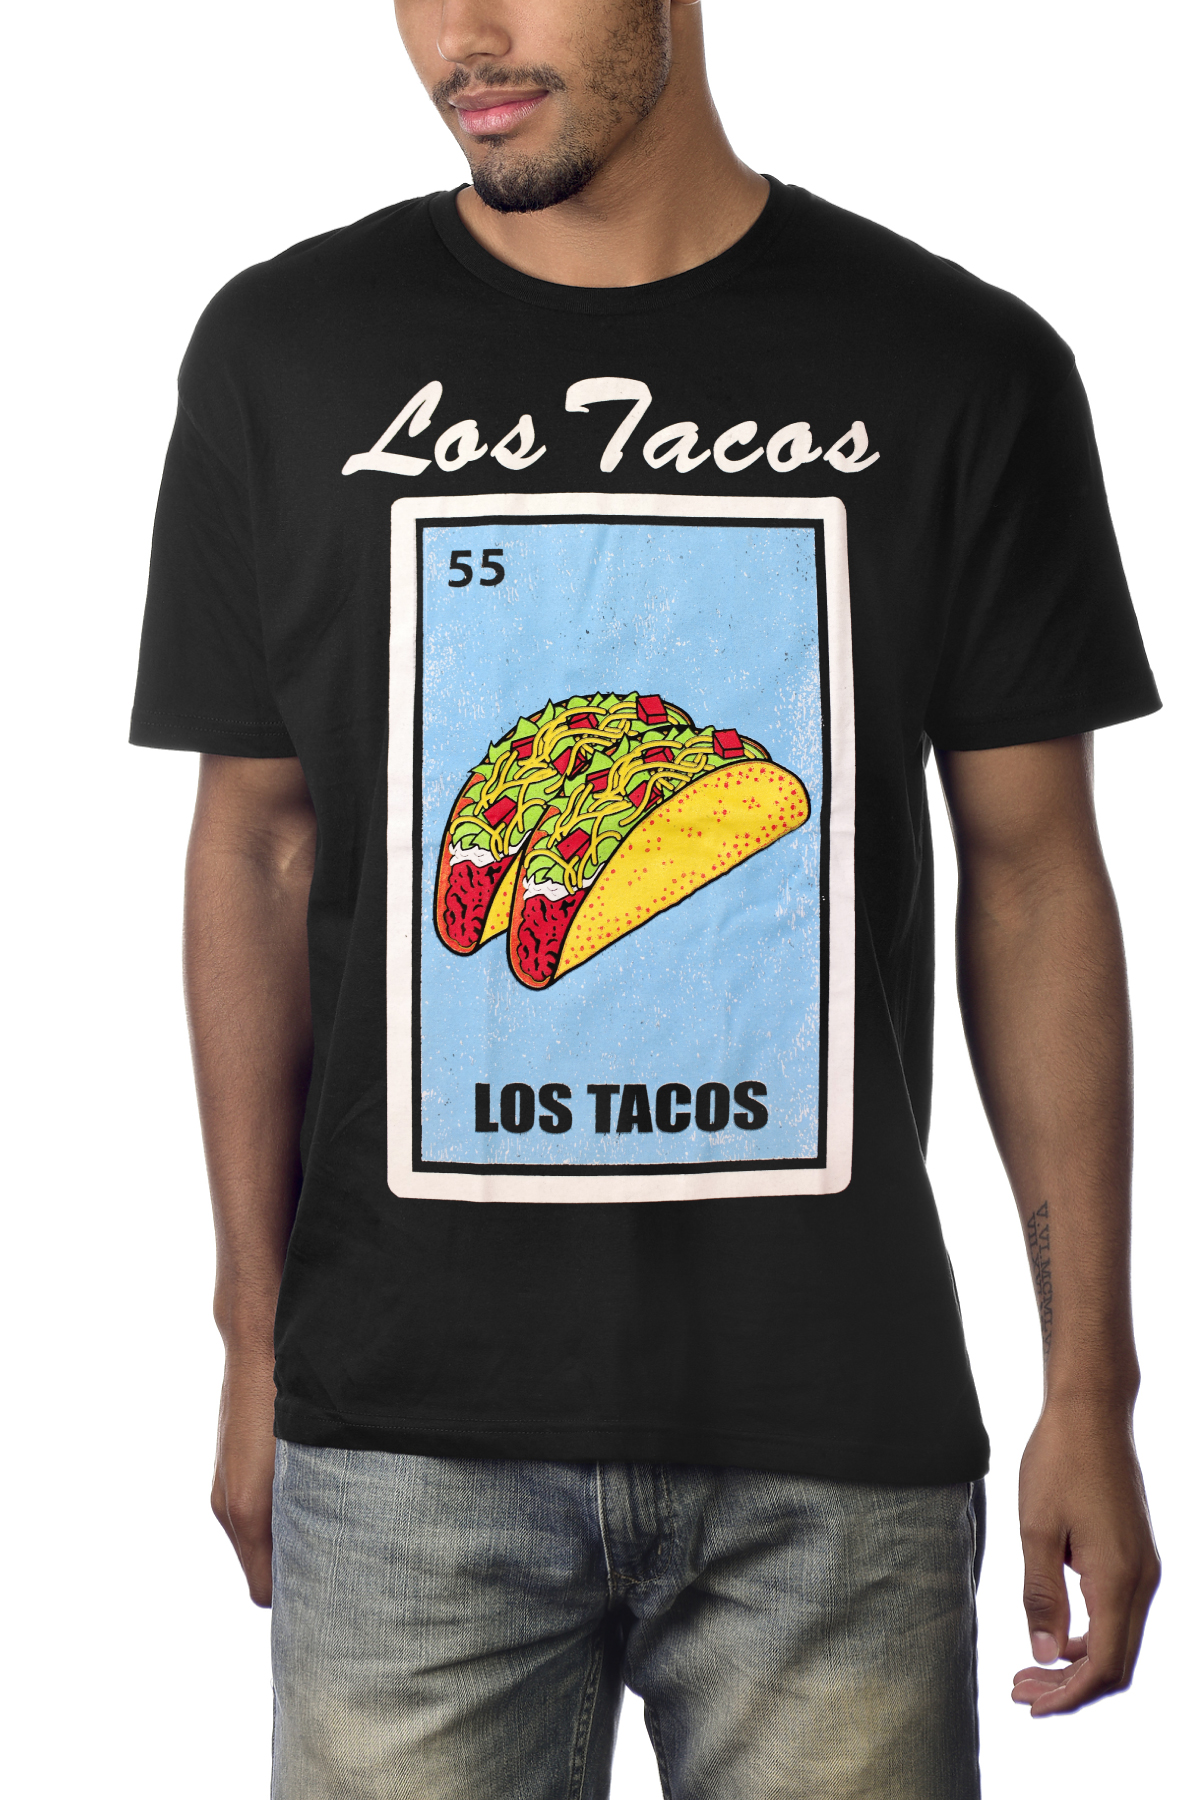 Popular Loteria Mexican Bingo Art Inspired Los Tacos Men’s T-Shirt ...